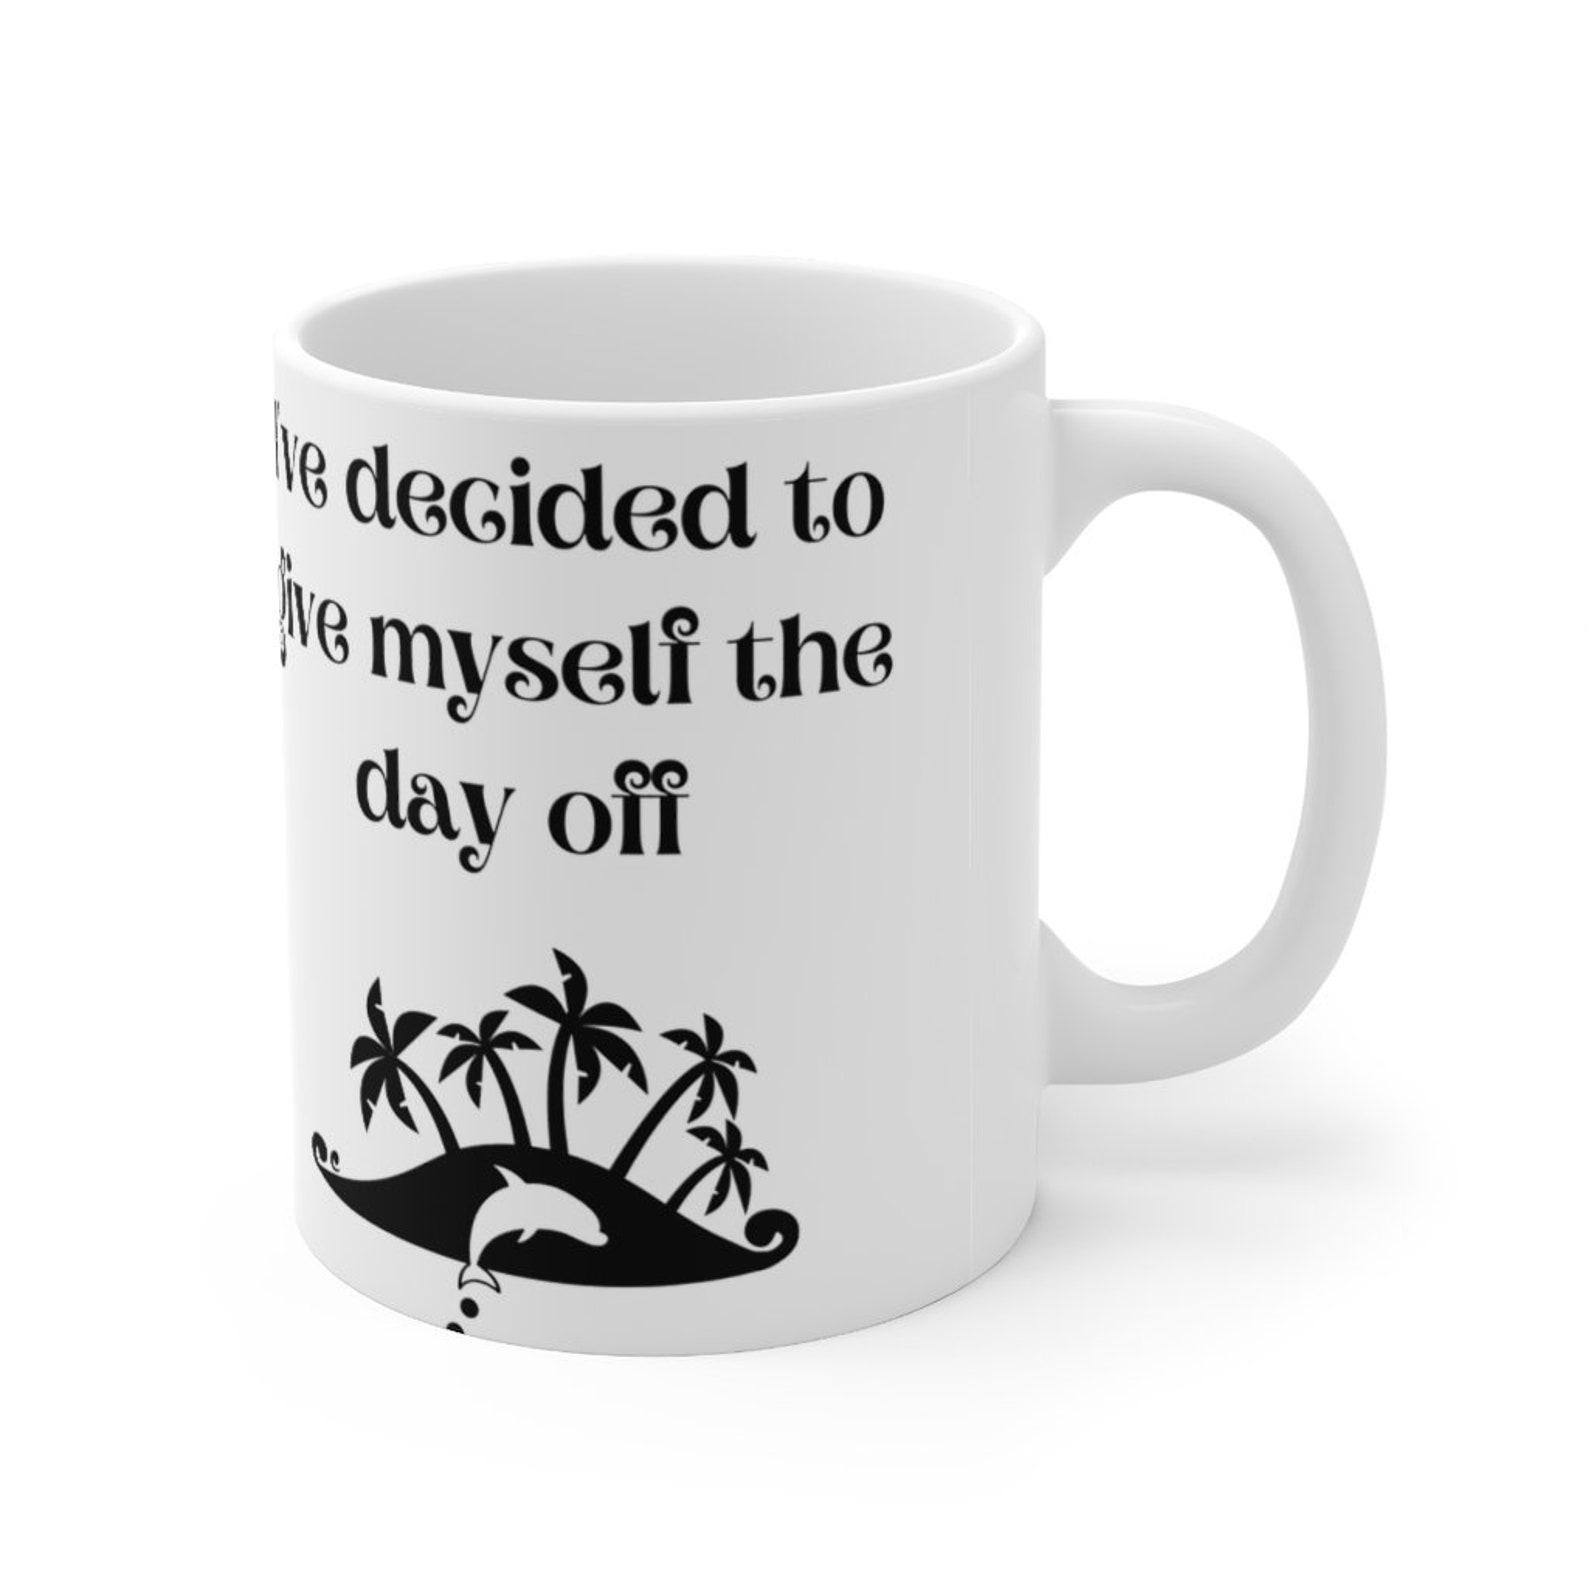 Funny Mug Gift For Co-Worker Colleague Boss. Mug for Work. | Etsy